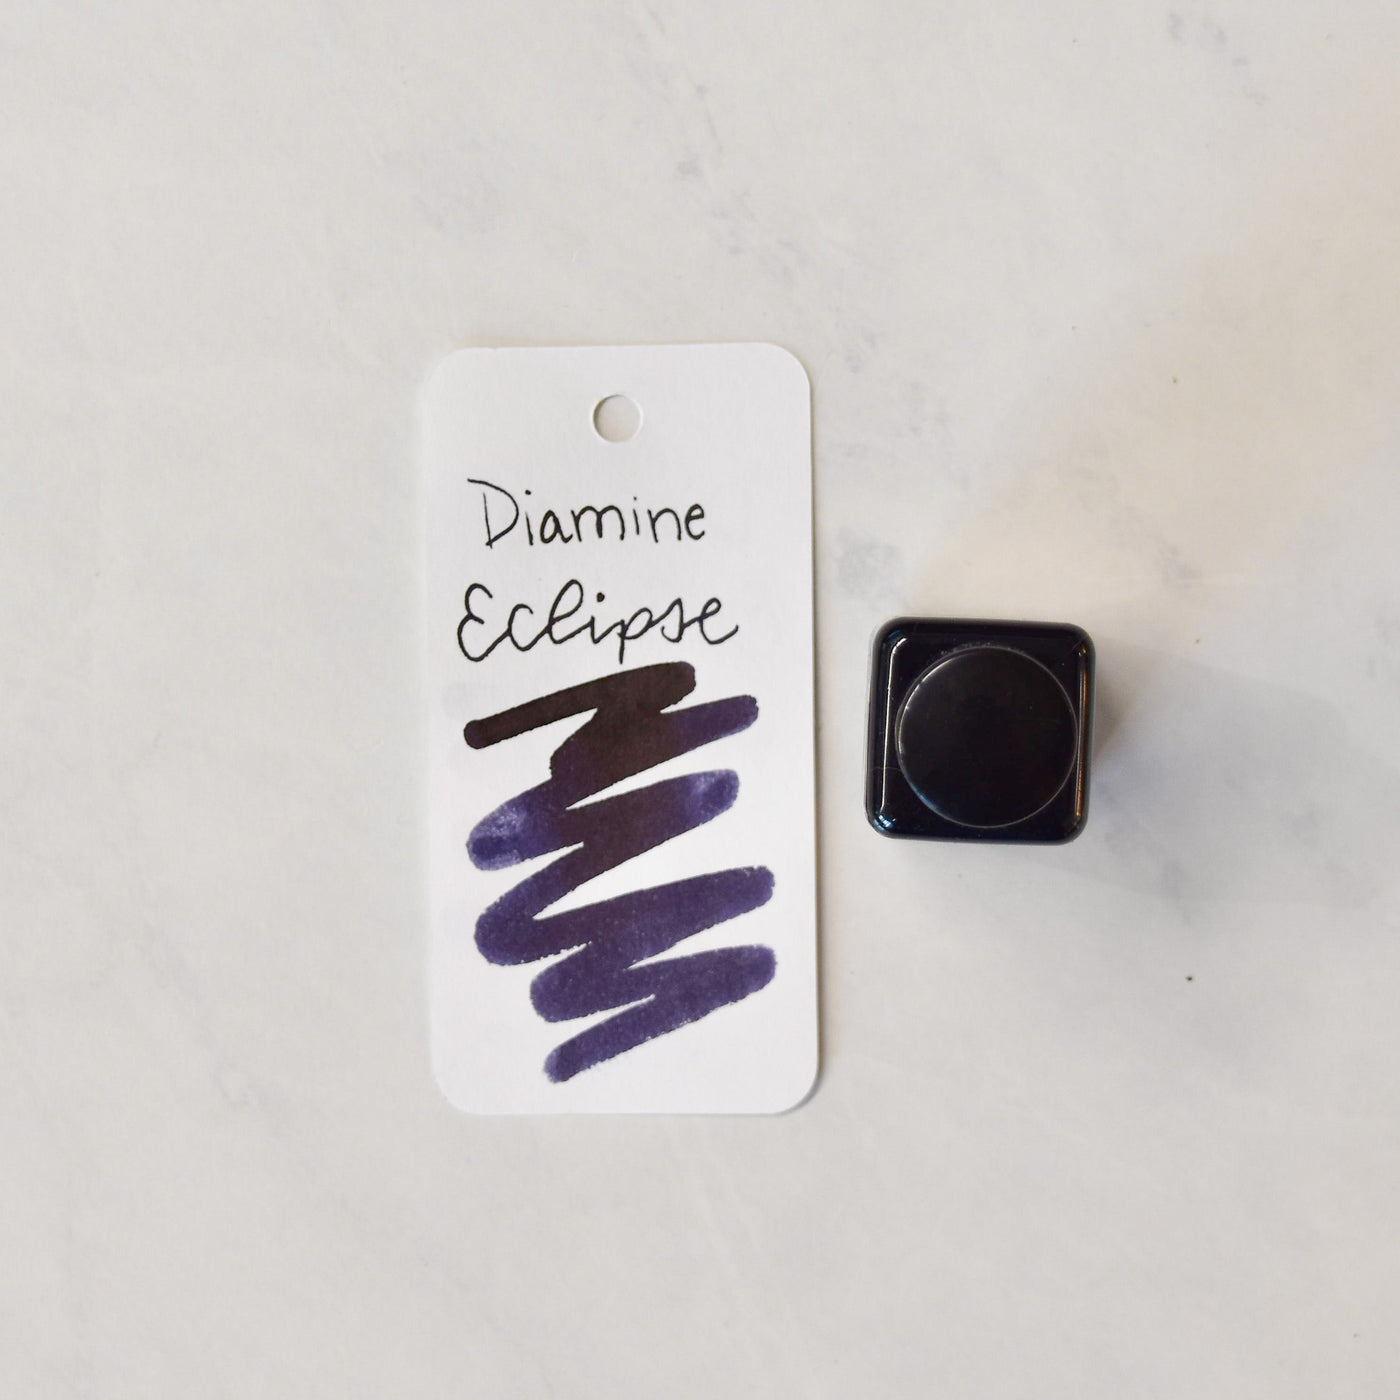 Diamine Eclipse Ink purple glass bottle